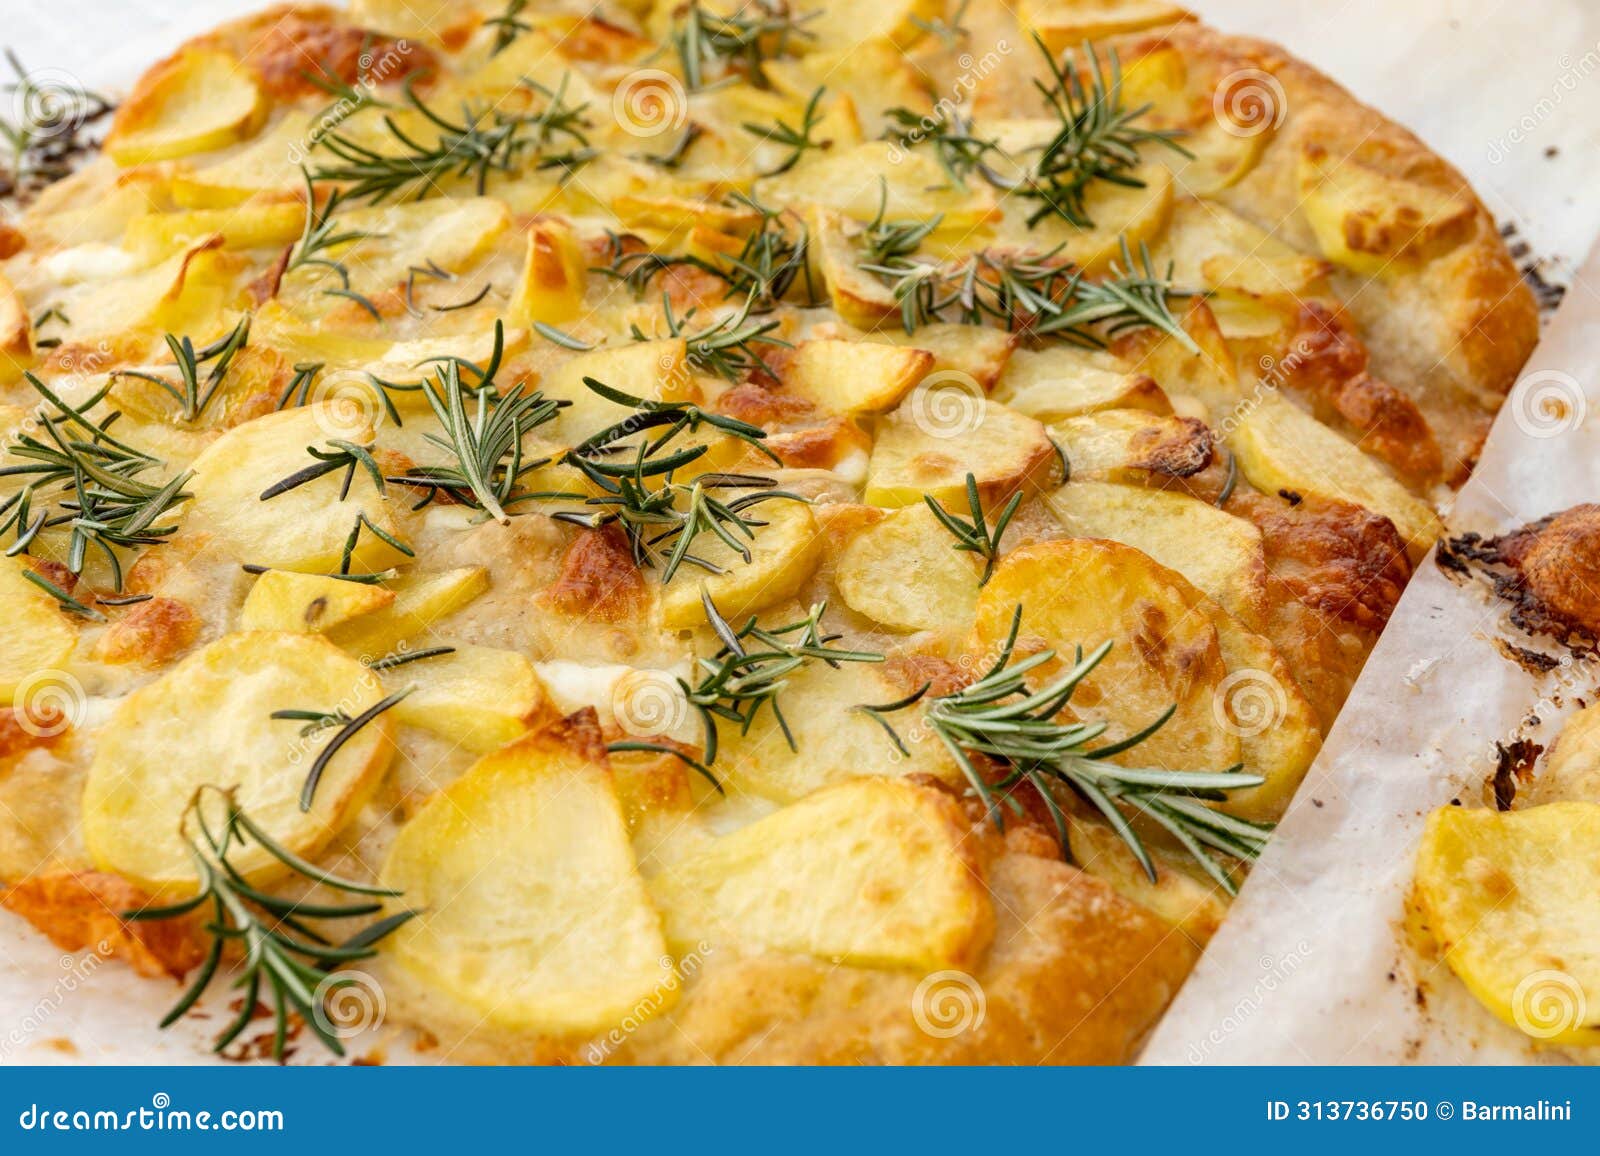 fresh baked focaccia or pala romana pizza with potato vegetables and rosemary in bakery in parma, emilia romania, italy